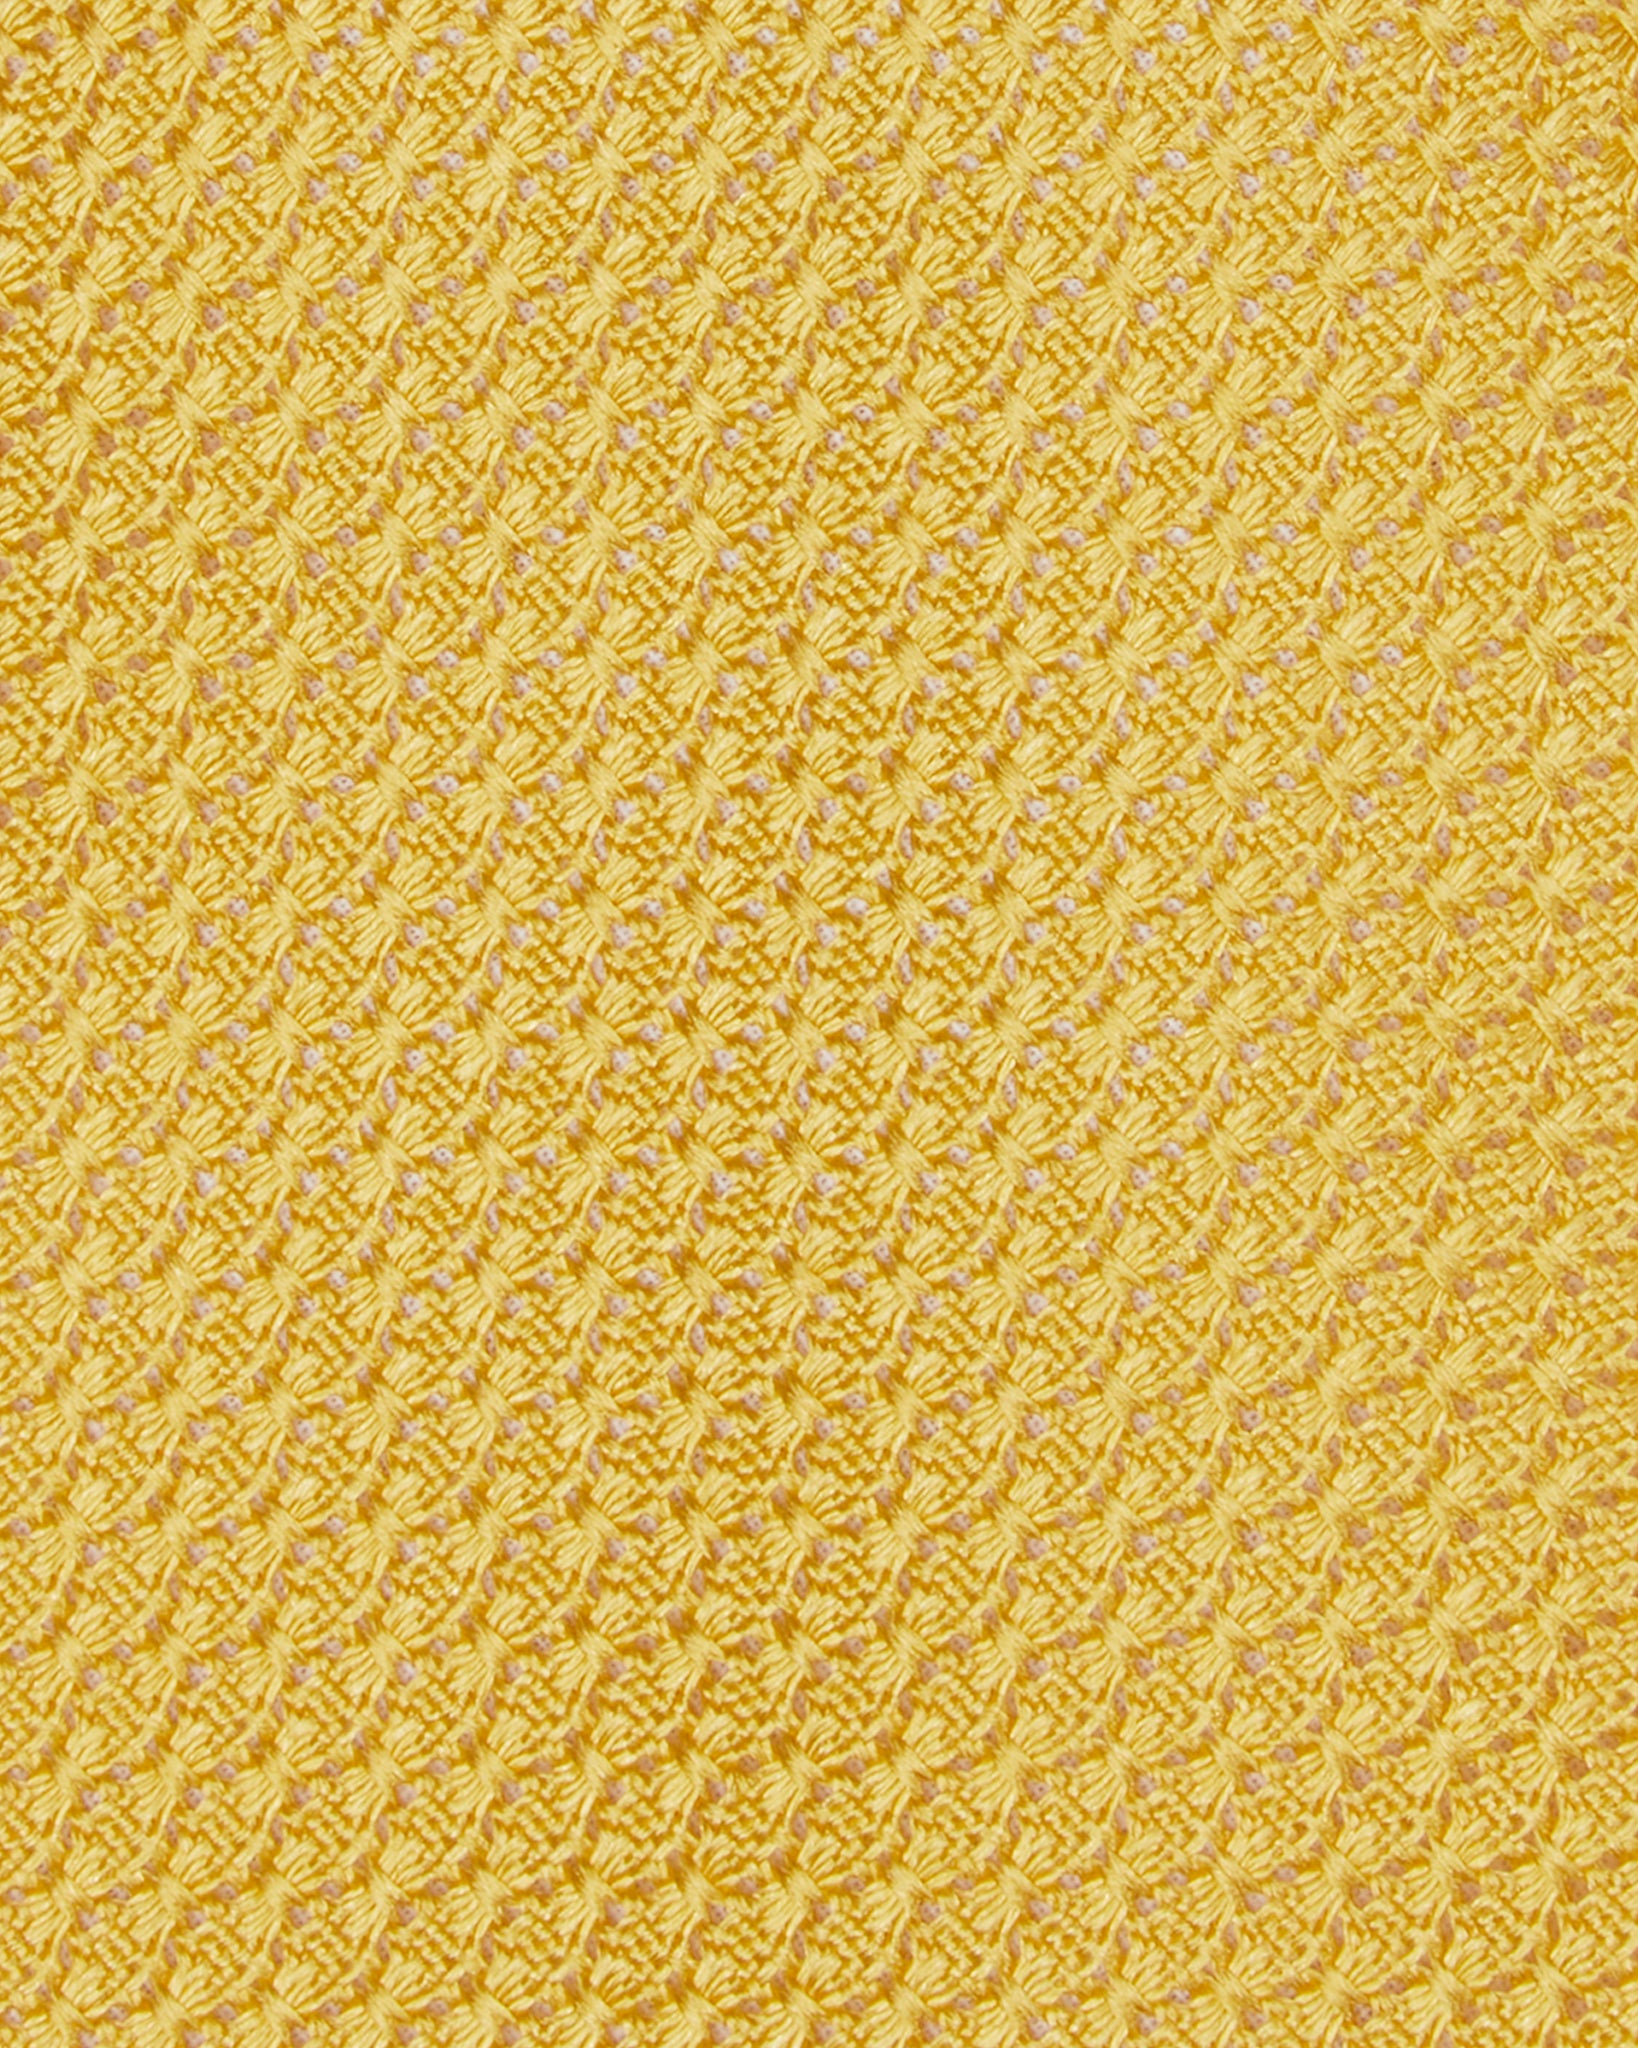 Silk Grosso Grenadine Tie in Gold